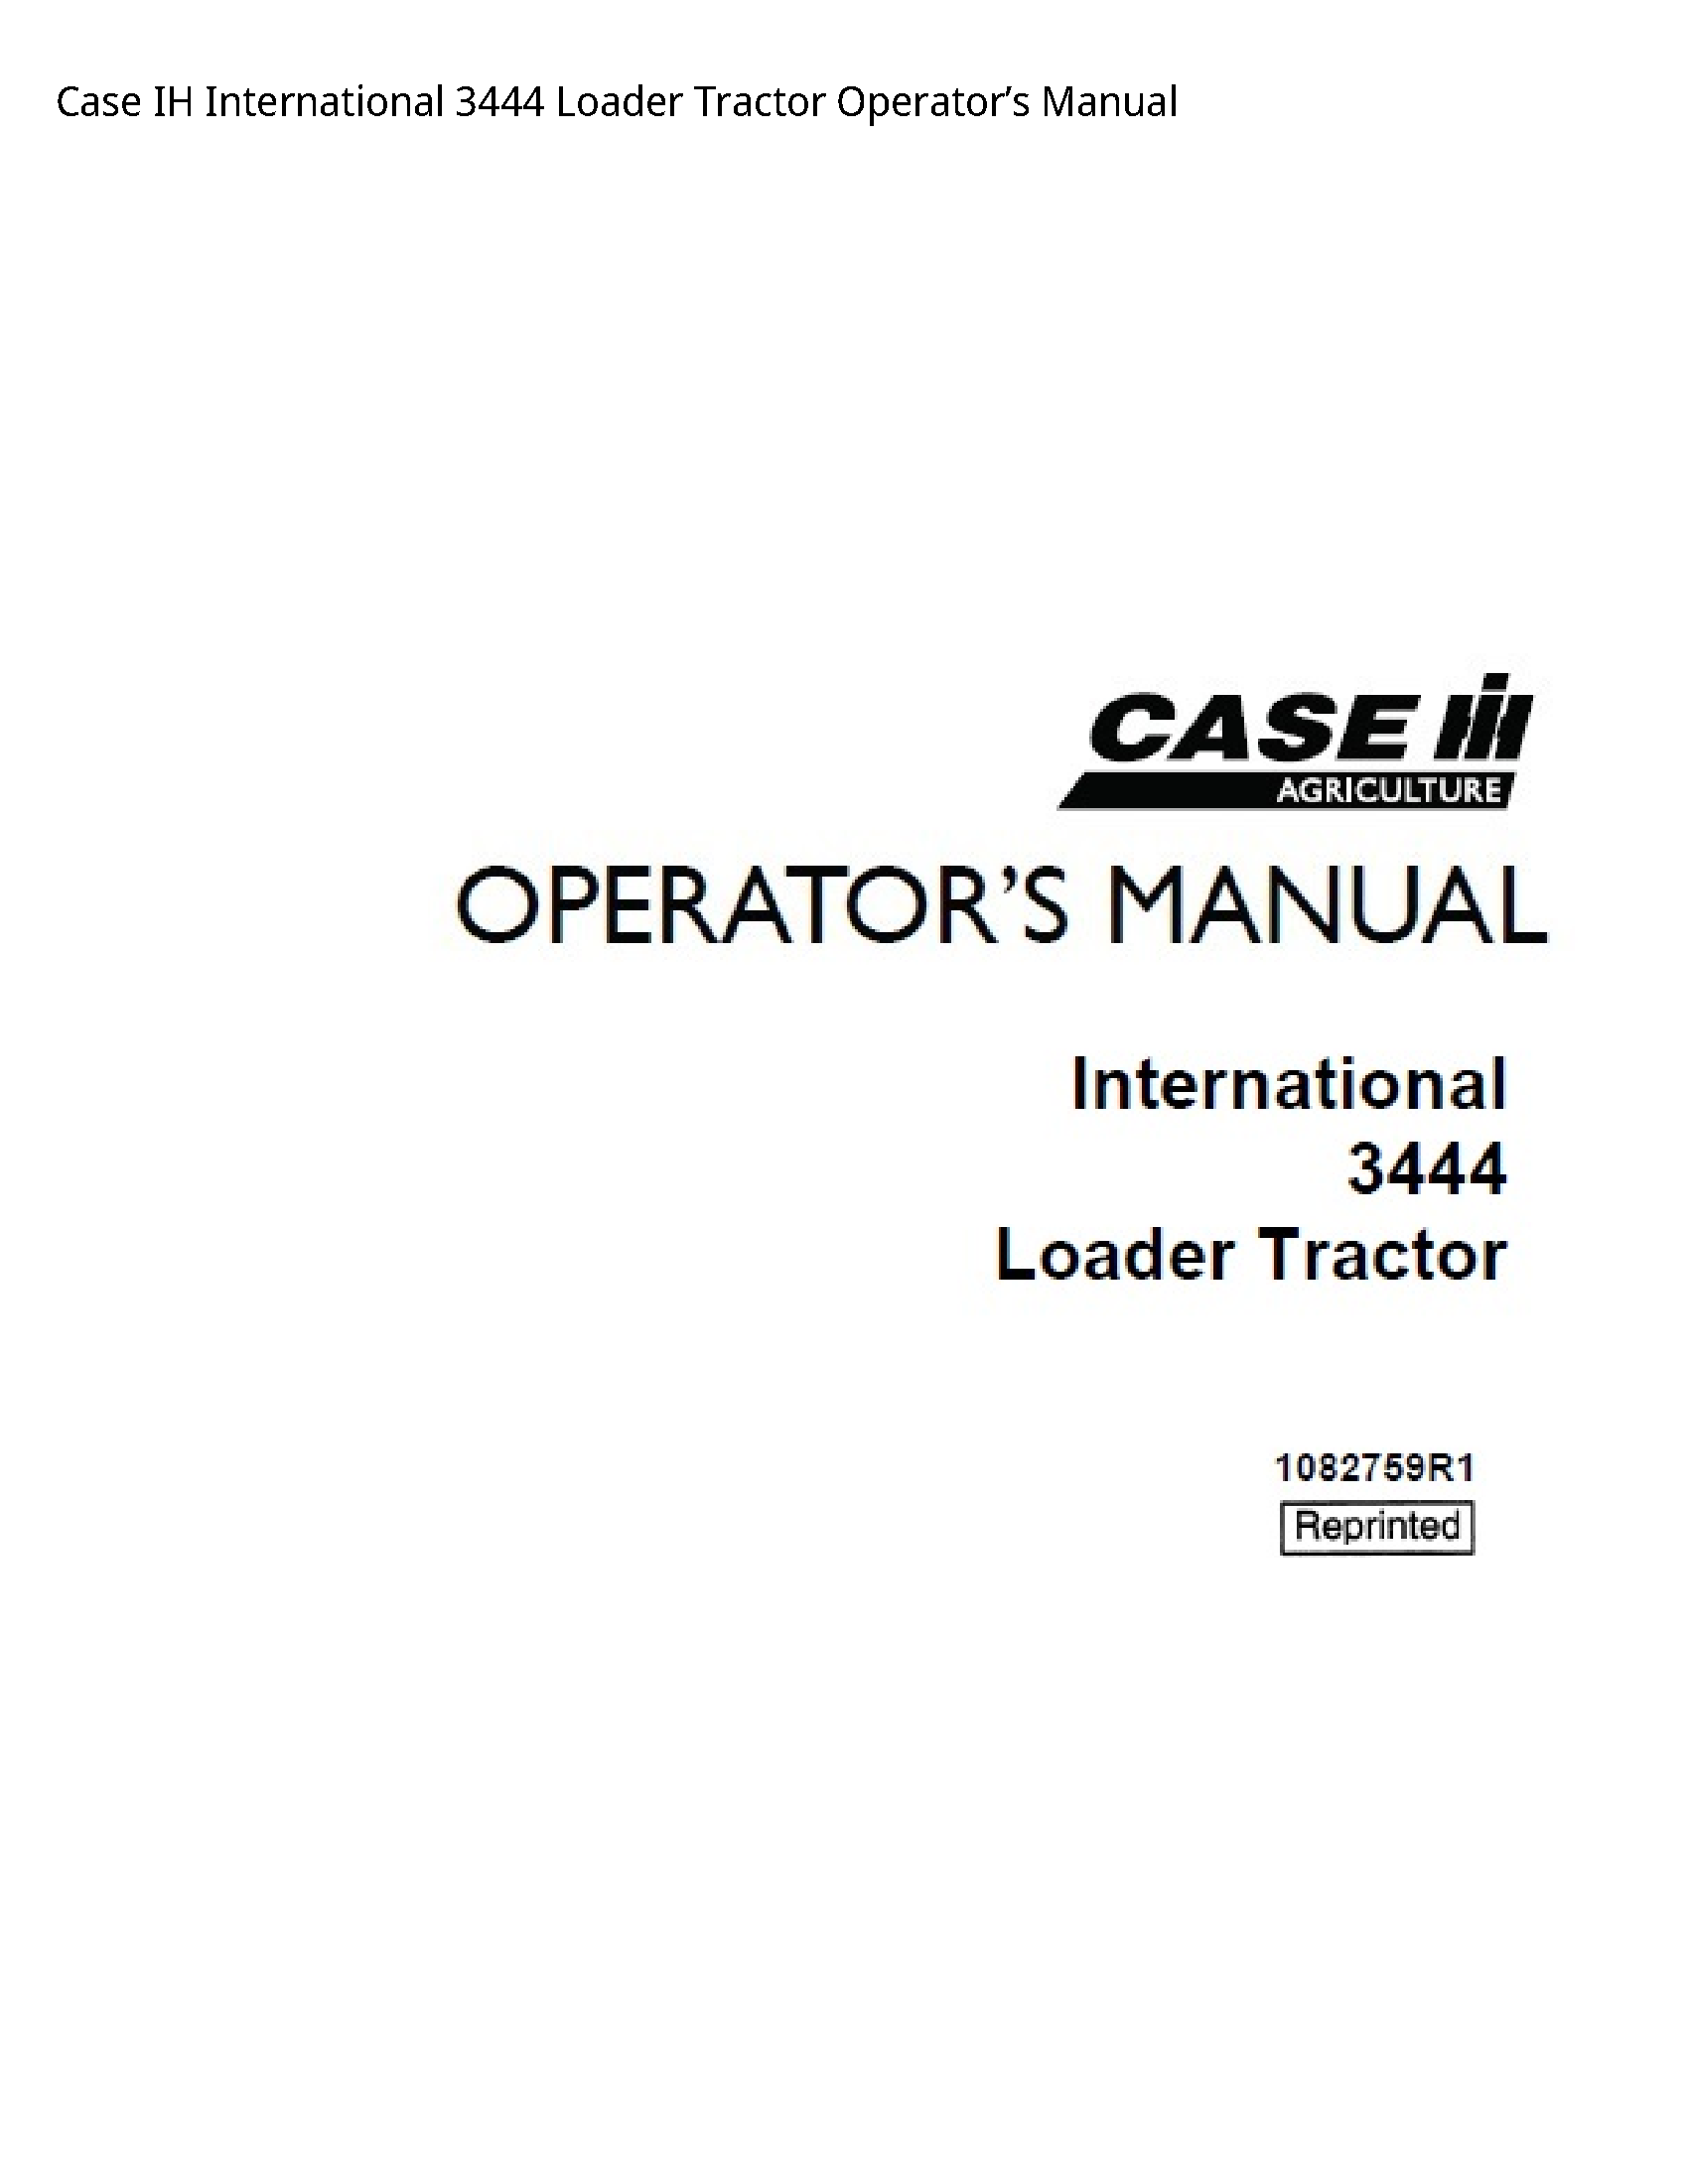 Case/Case IH 3444 IH International Loader Tractor Operator’s manual